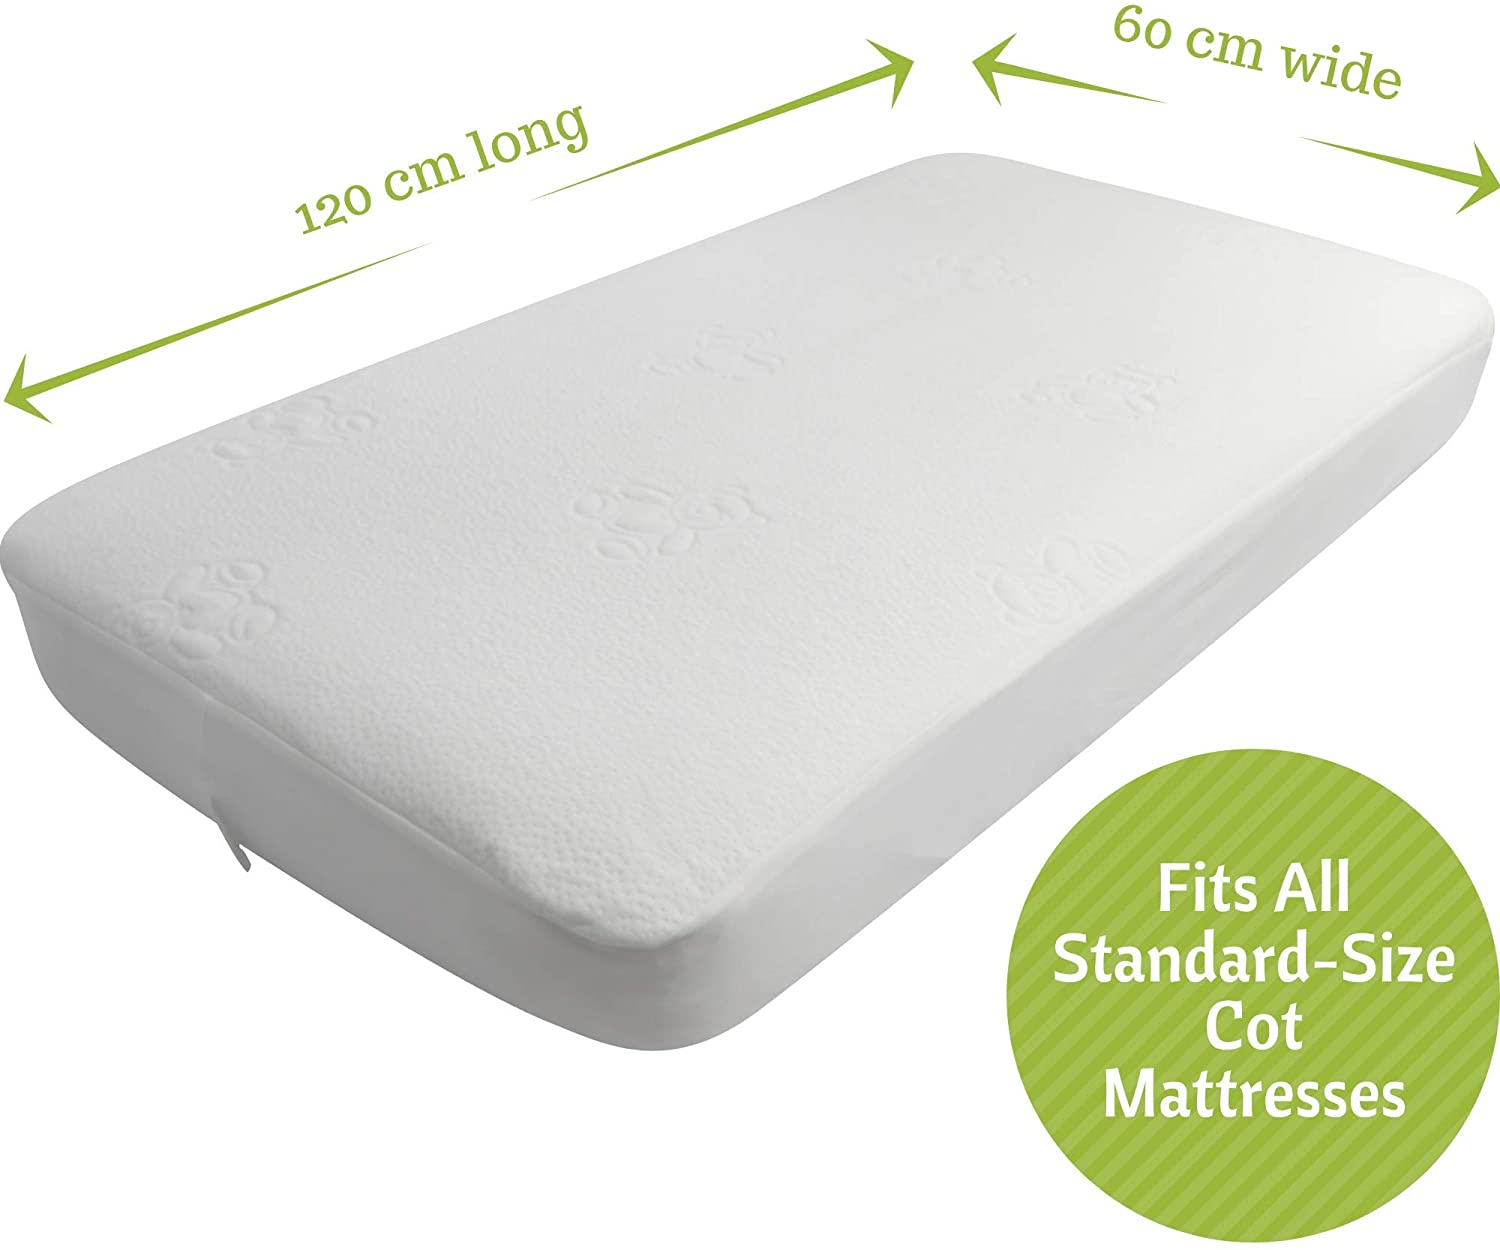 cot waterproof mattress protector 120 x 60